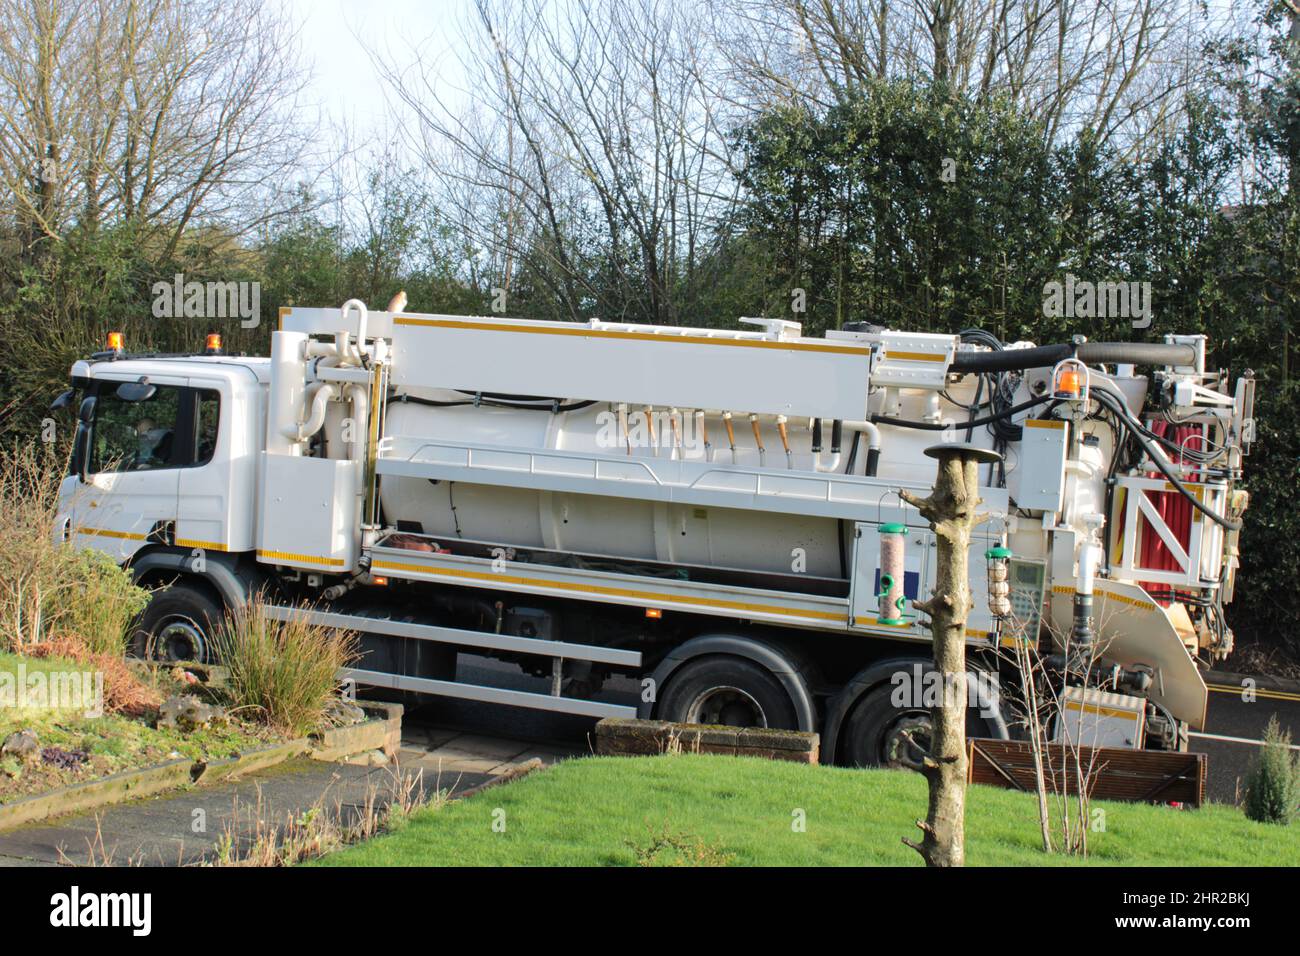 Wastewater maintenance vehicle UK with jetting hose on the rear Stock Photo